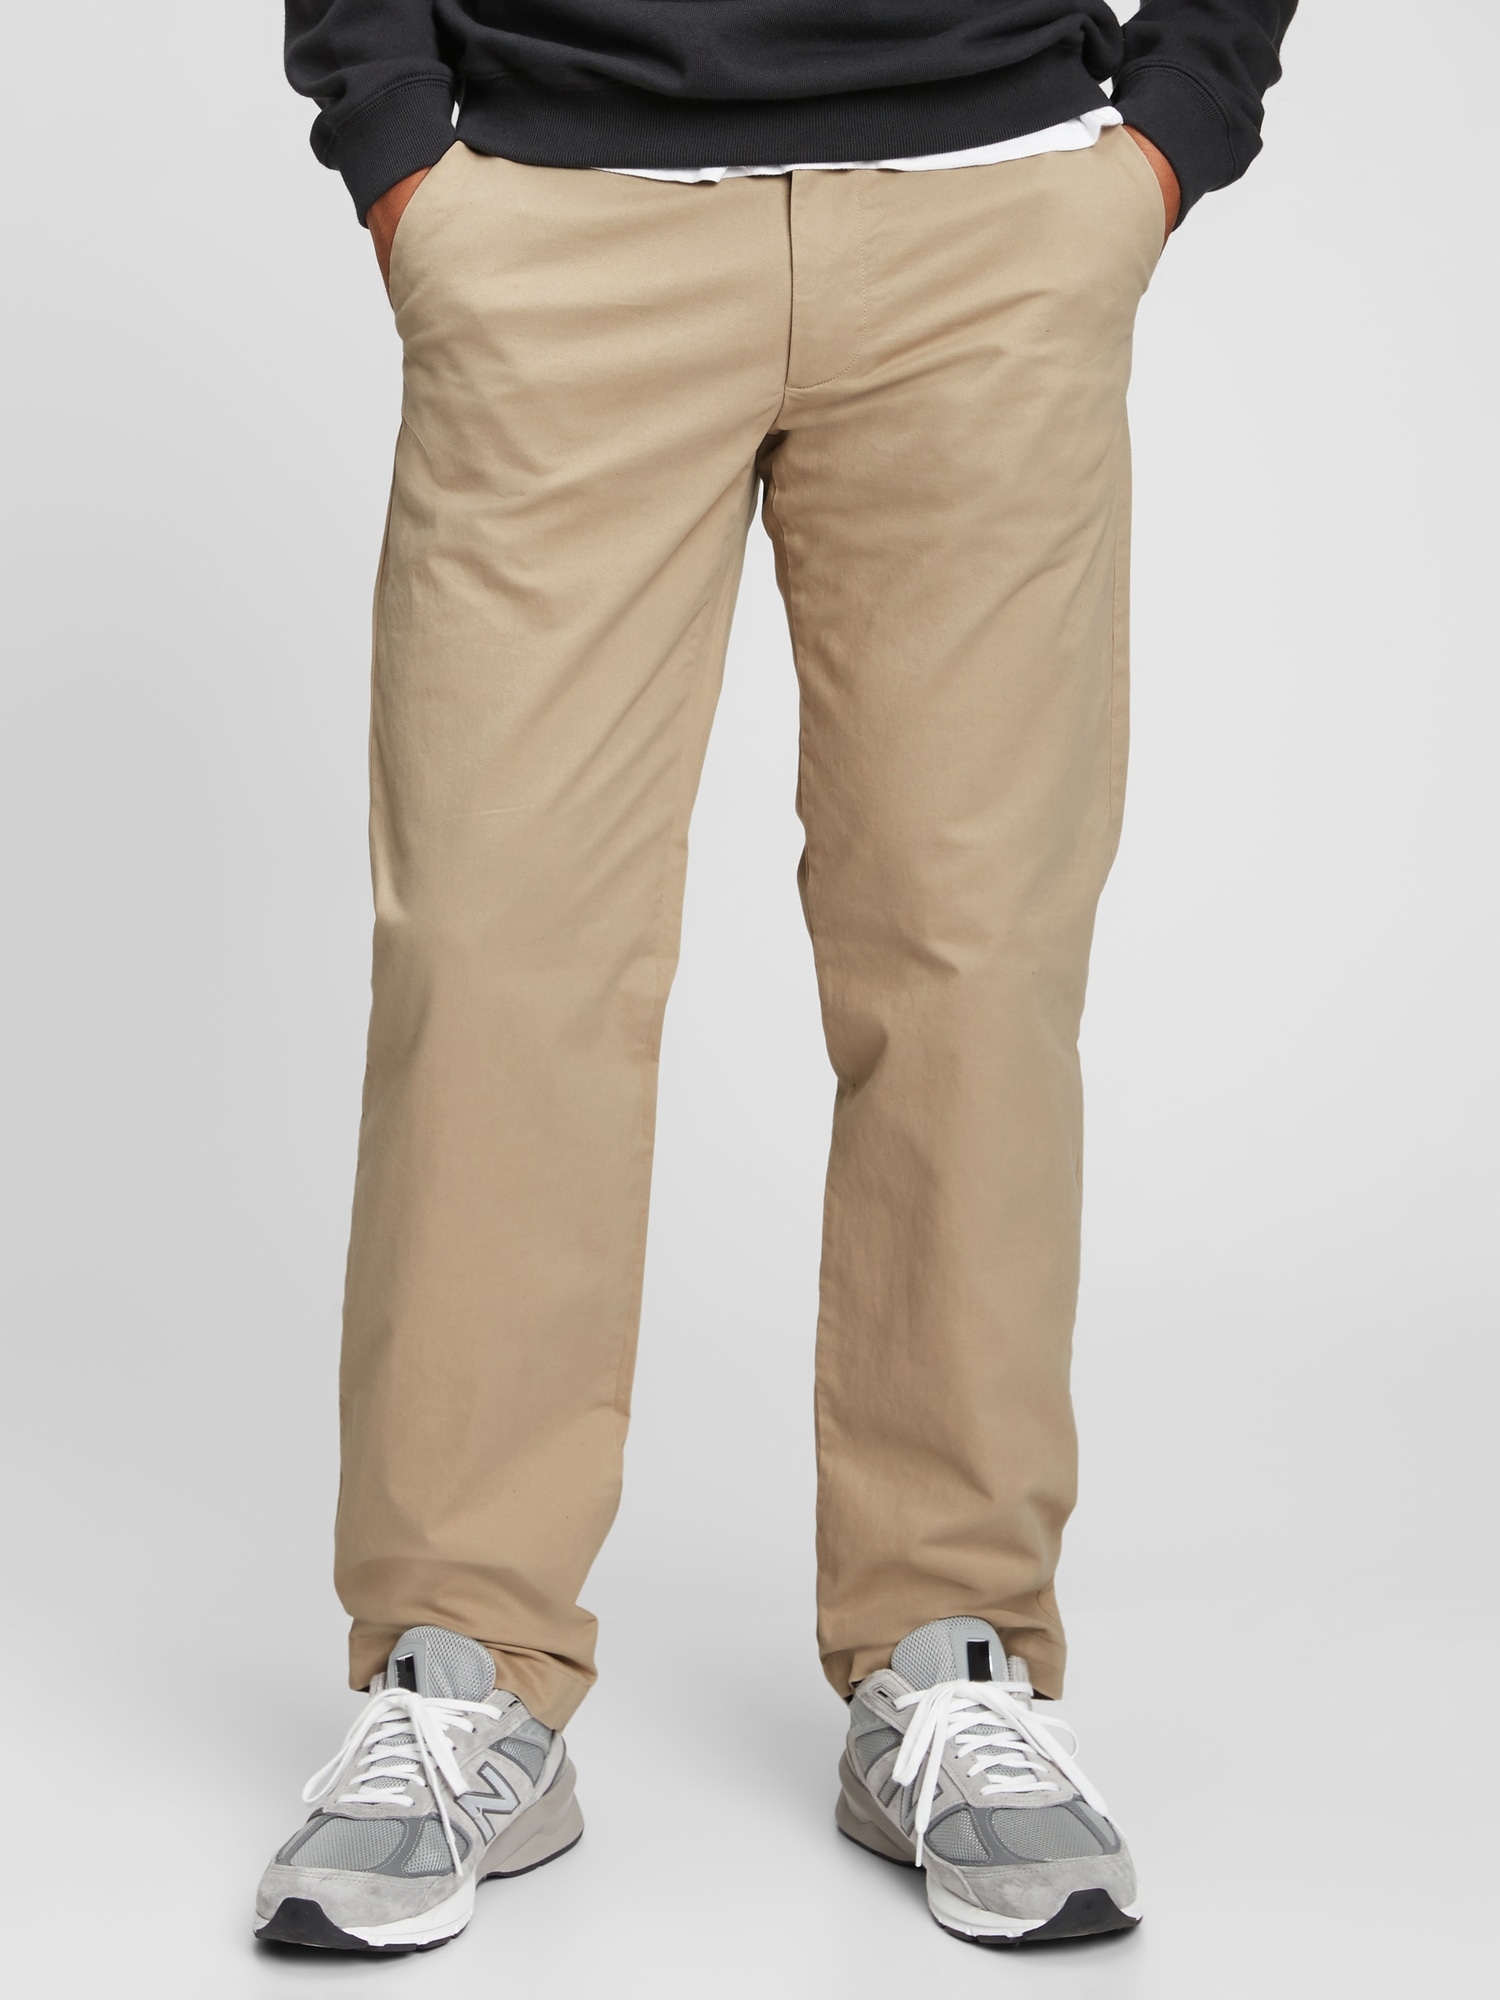 Gap Check Flat-Front Dress Pants Pants for Men | Mercari